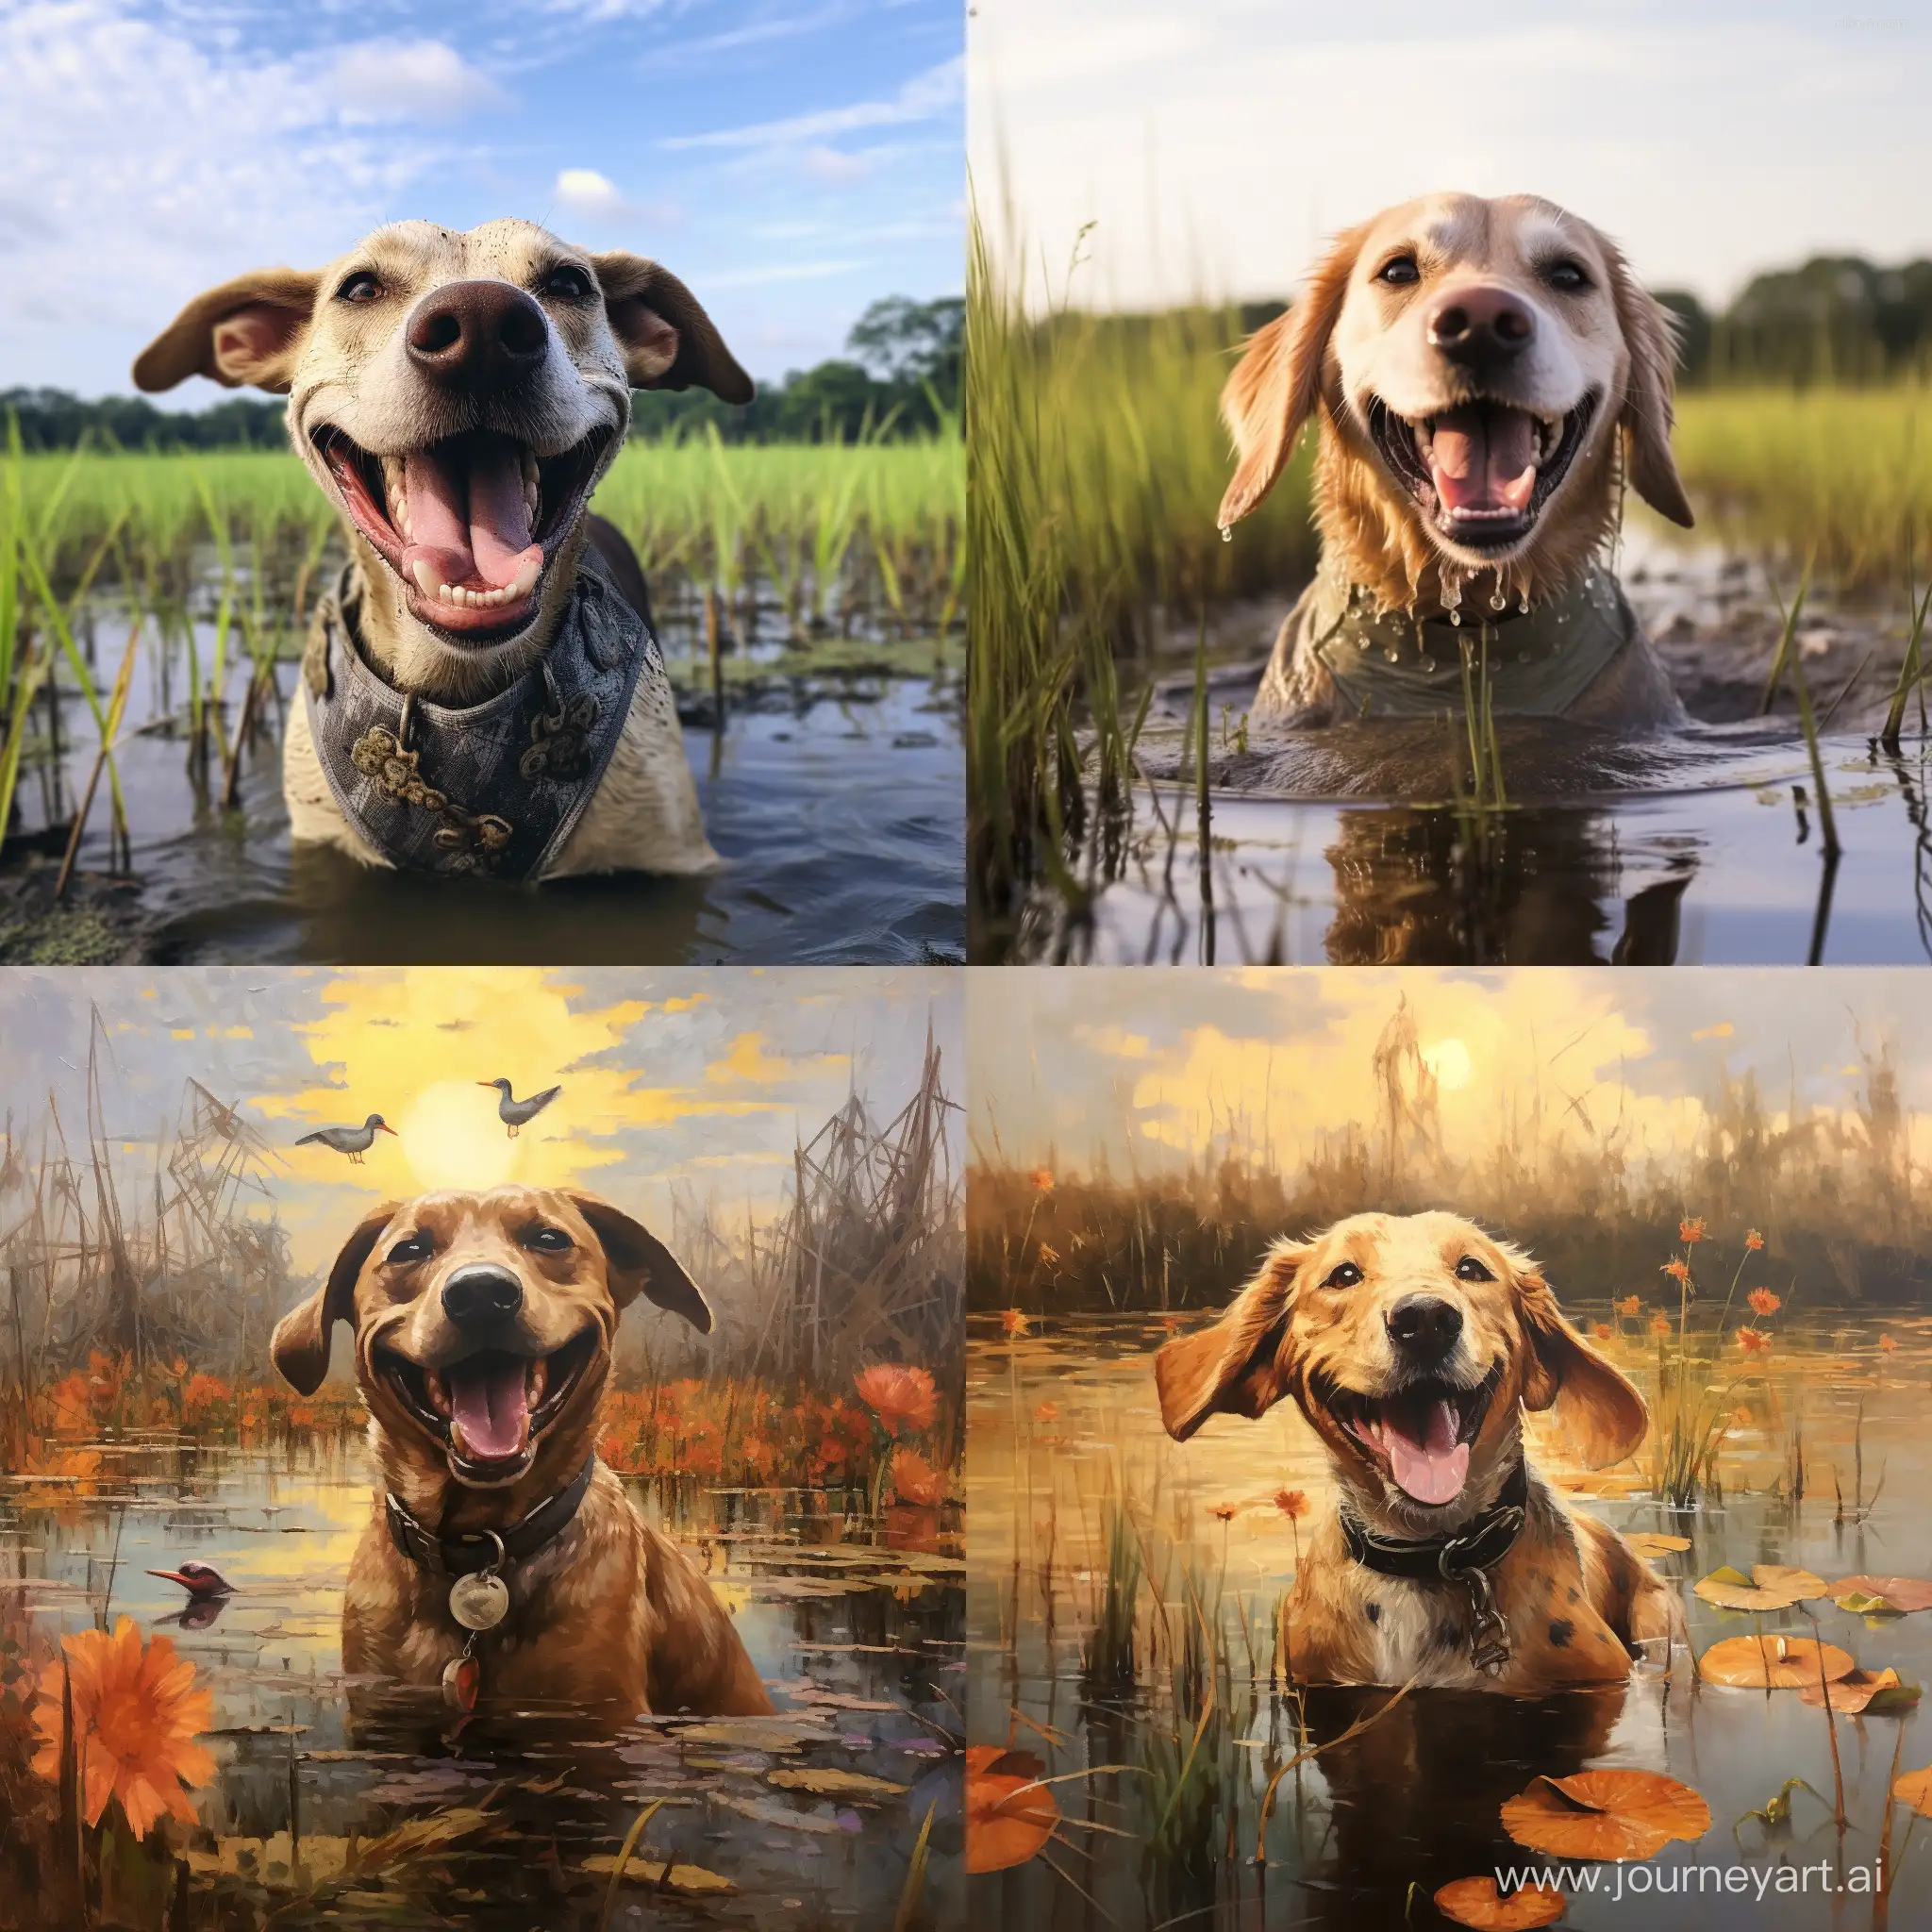 Joyful-Canine-Frolicking-in-a-Picturesque-Wetland-Landscape